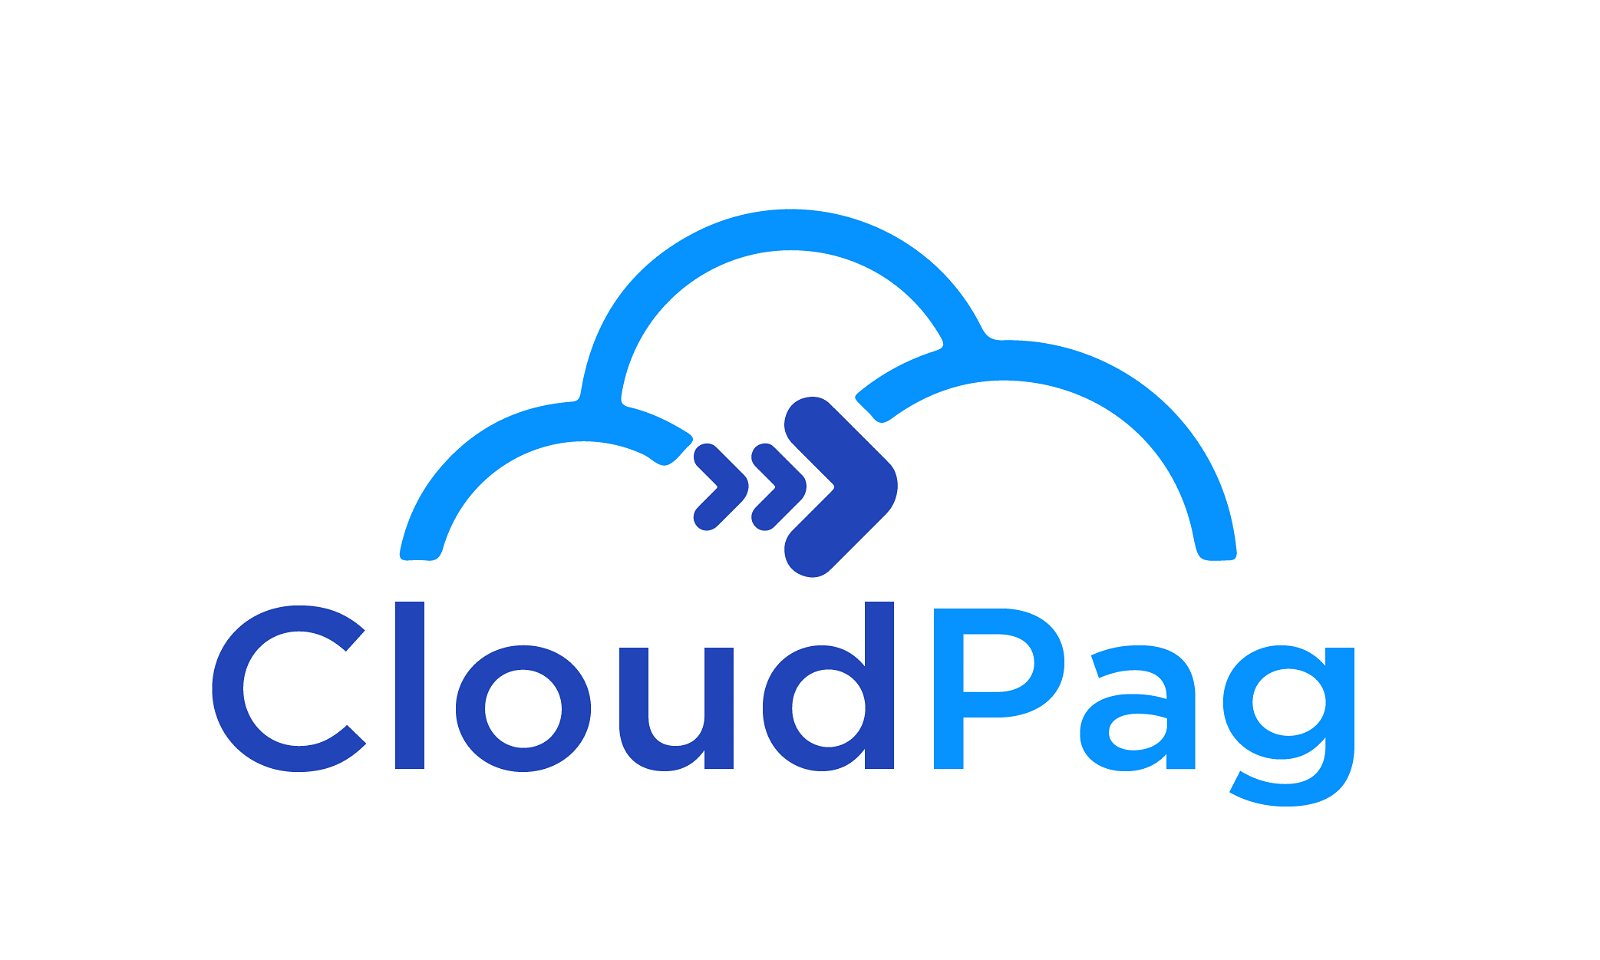 CloudPag.com - Creative brandable domain for sale